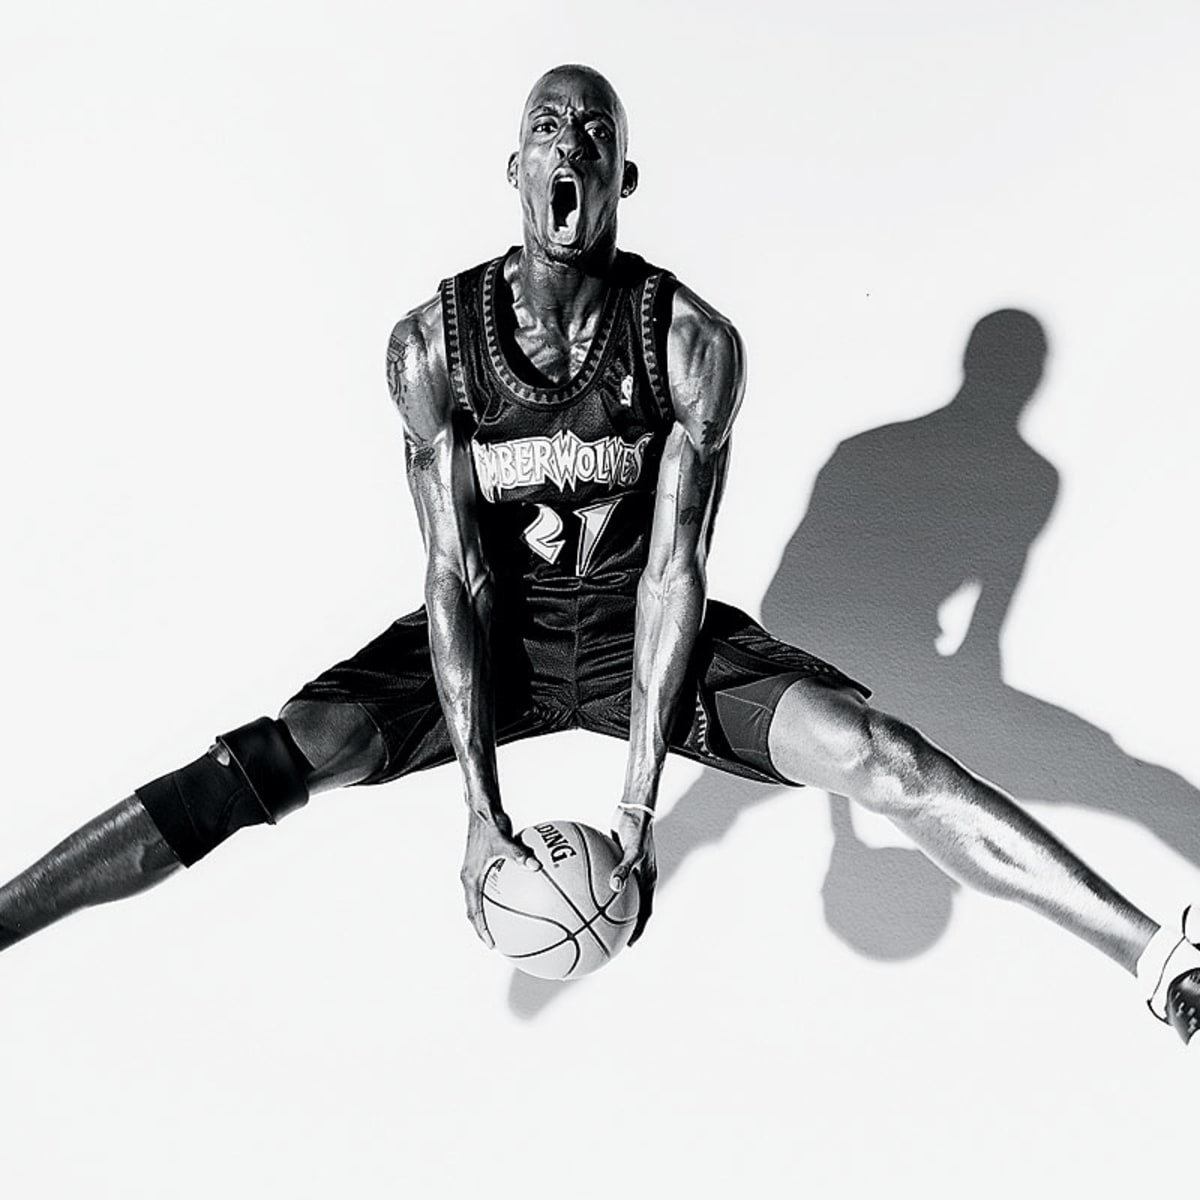 Nike Knicks On Court 22-23 Black Practice Tee